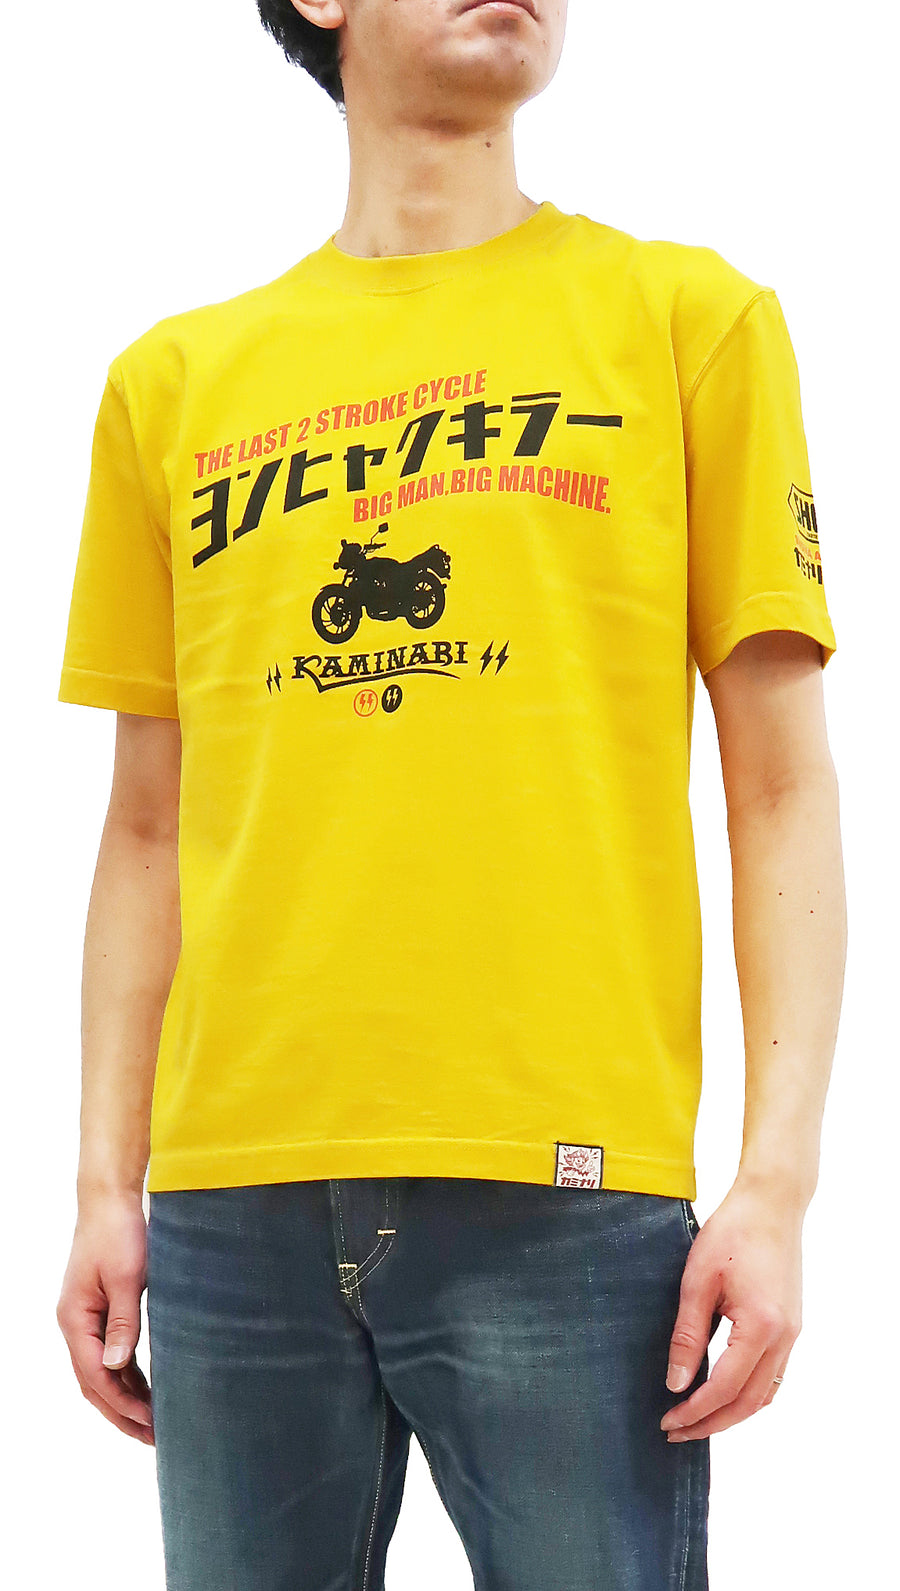 Kaminari T-Shirt Men's Classic Japanese Motorcycle Graphic Short Sleeve Tee KMT-227 Yellow